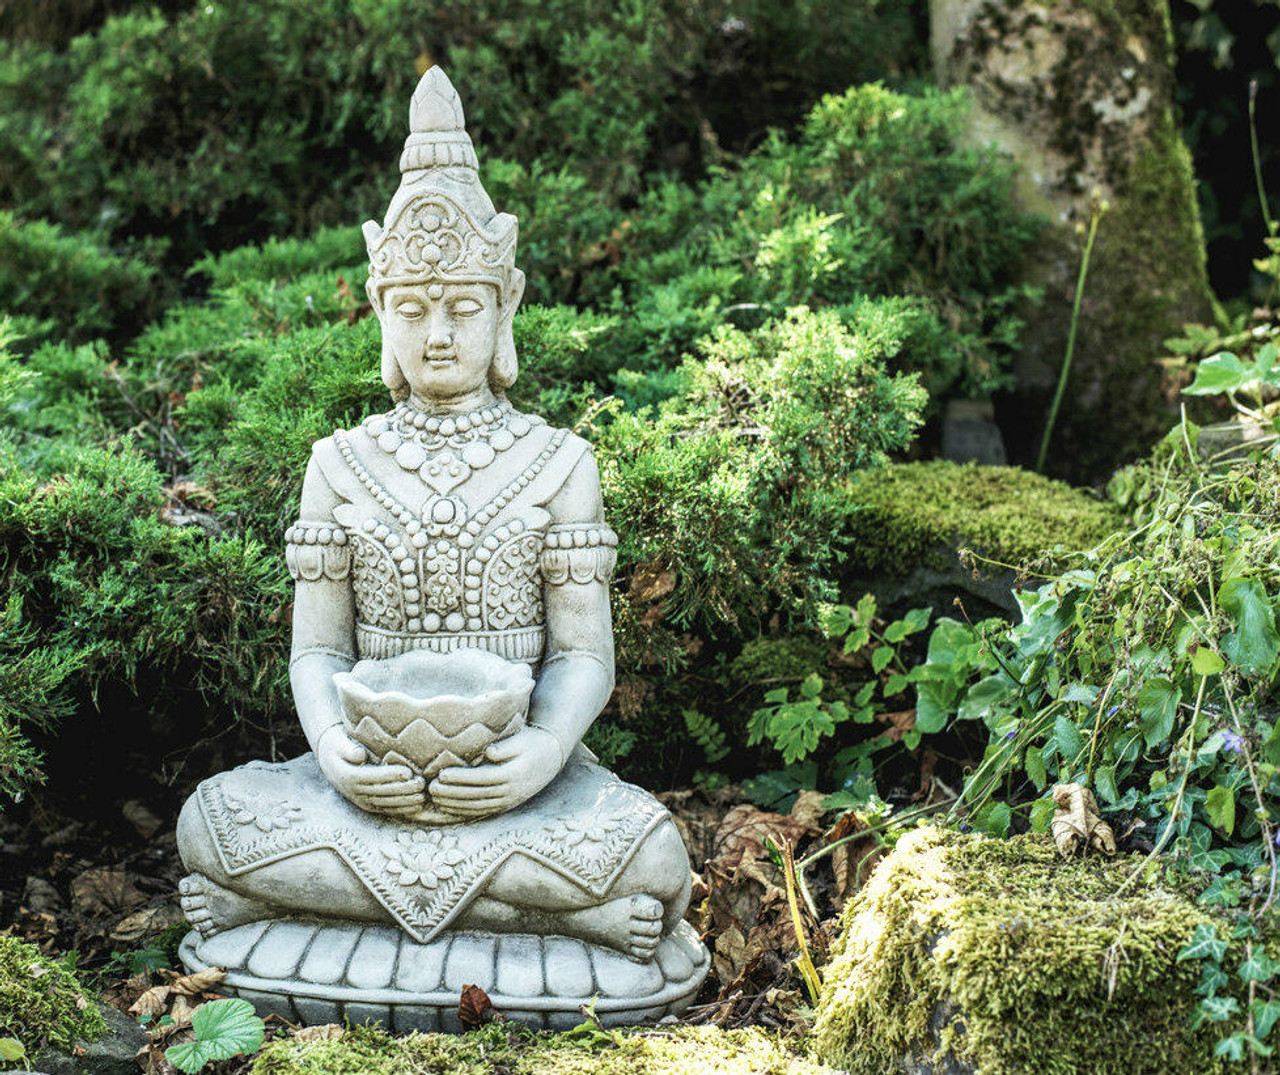 Medium sized Sitting in Lotus Thai Buddha Statue